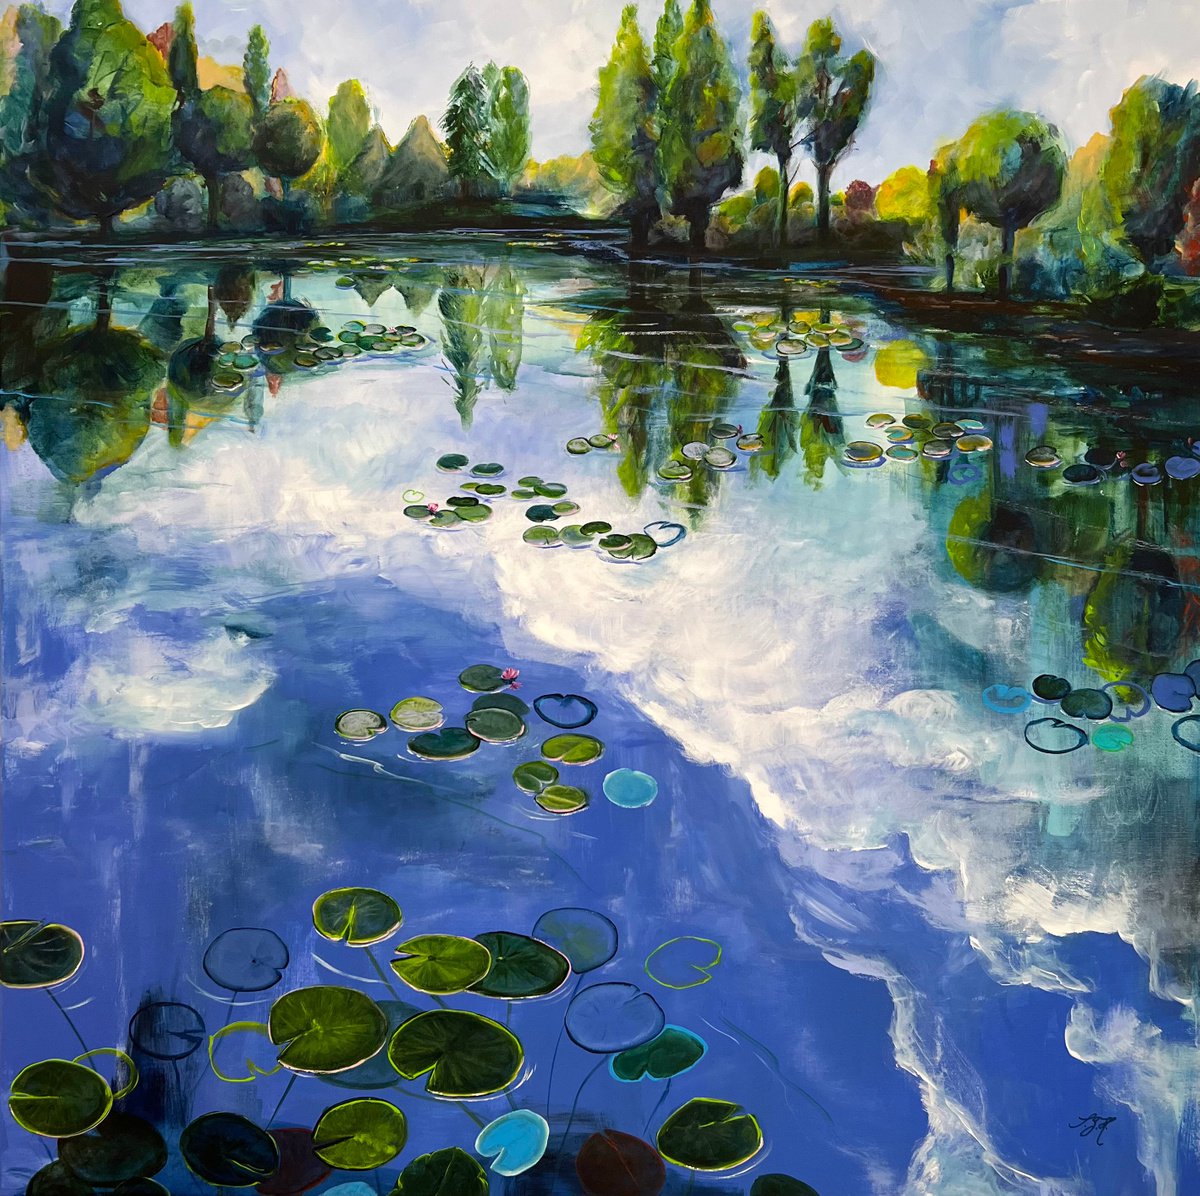 Waterlilies Pond 1 by Sandra Gebhardt-Hoepfner